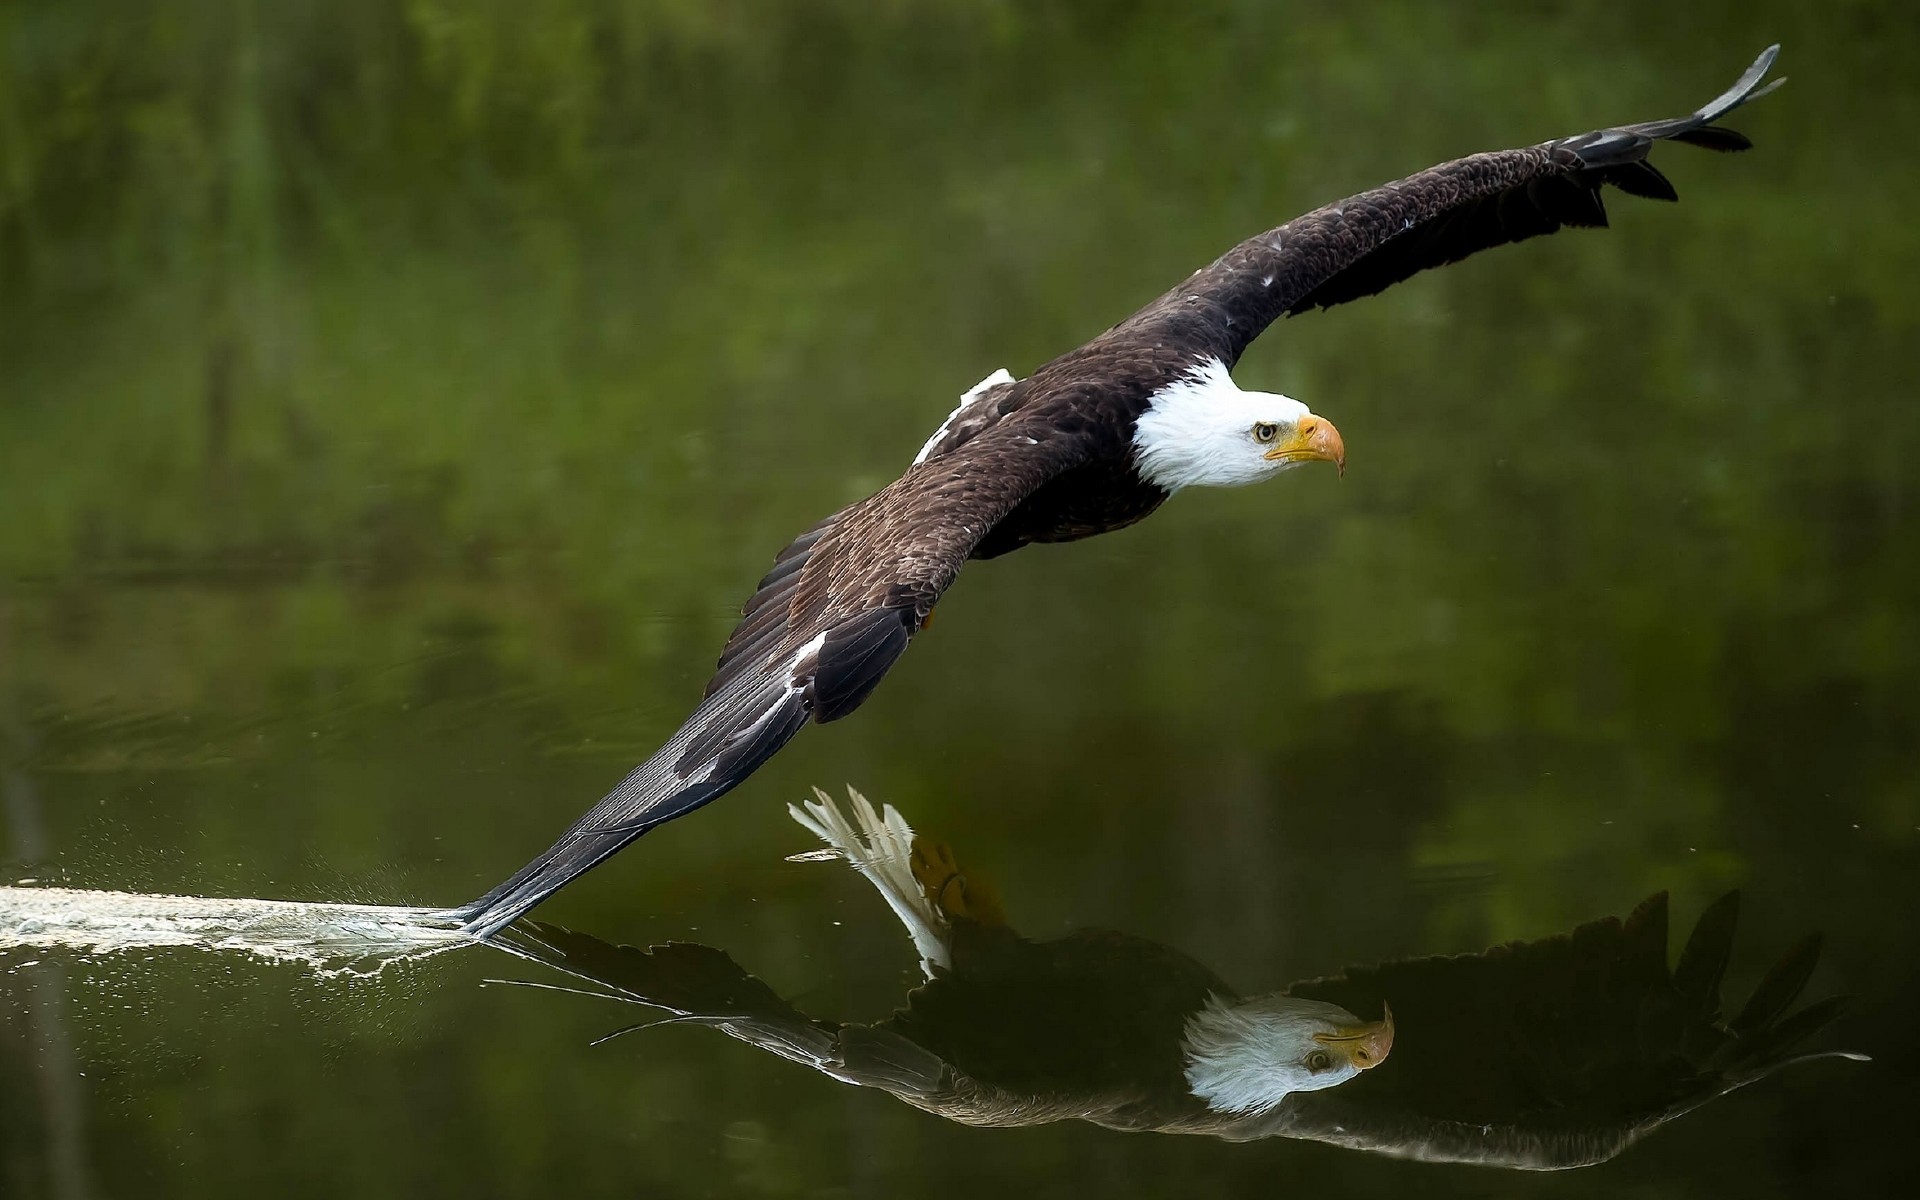 General 1920x1200 bald eagle animals birds reflection water flying lake nature eagle